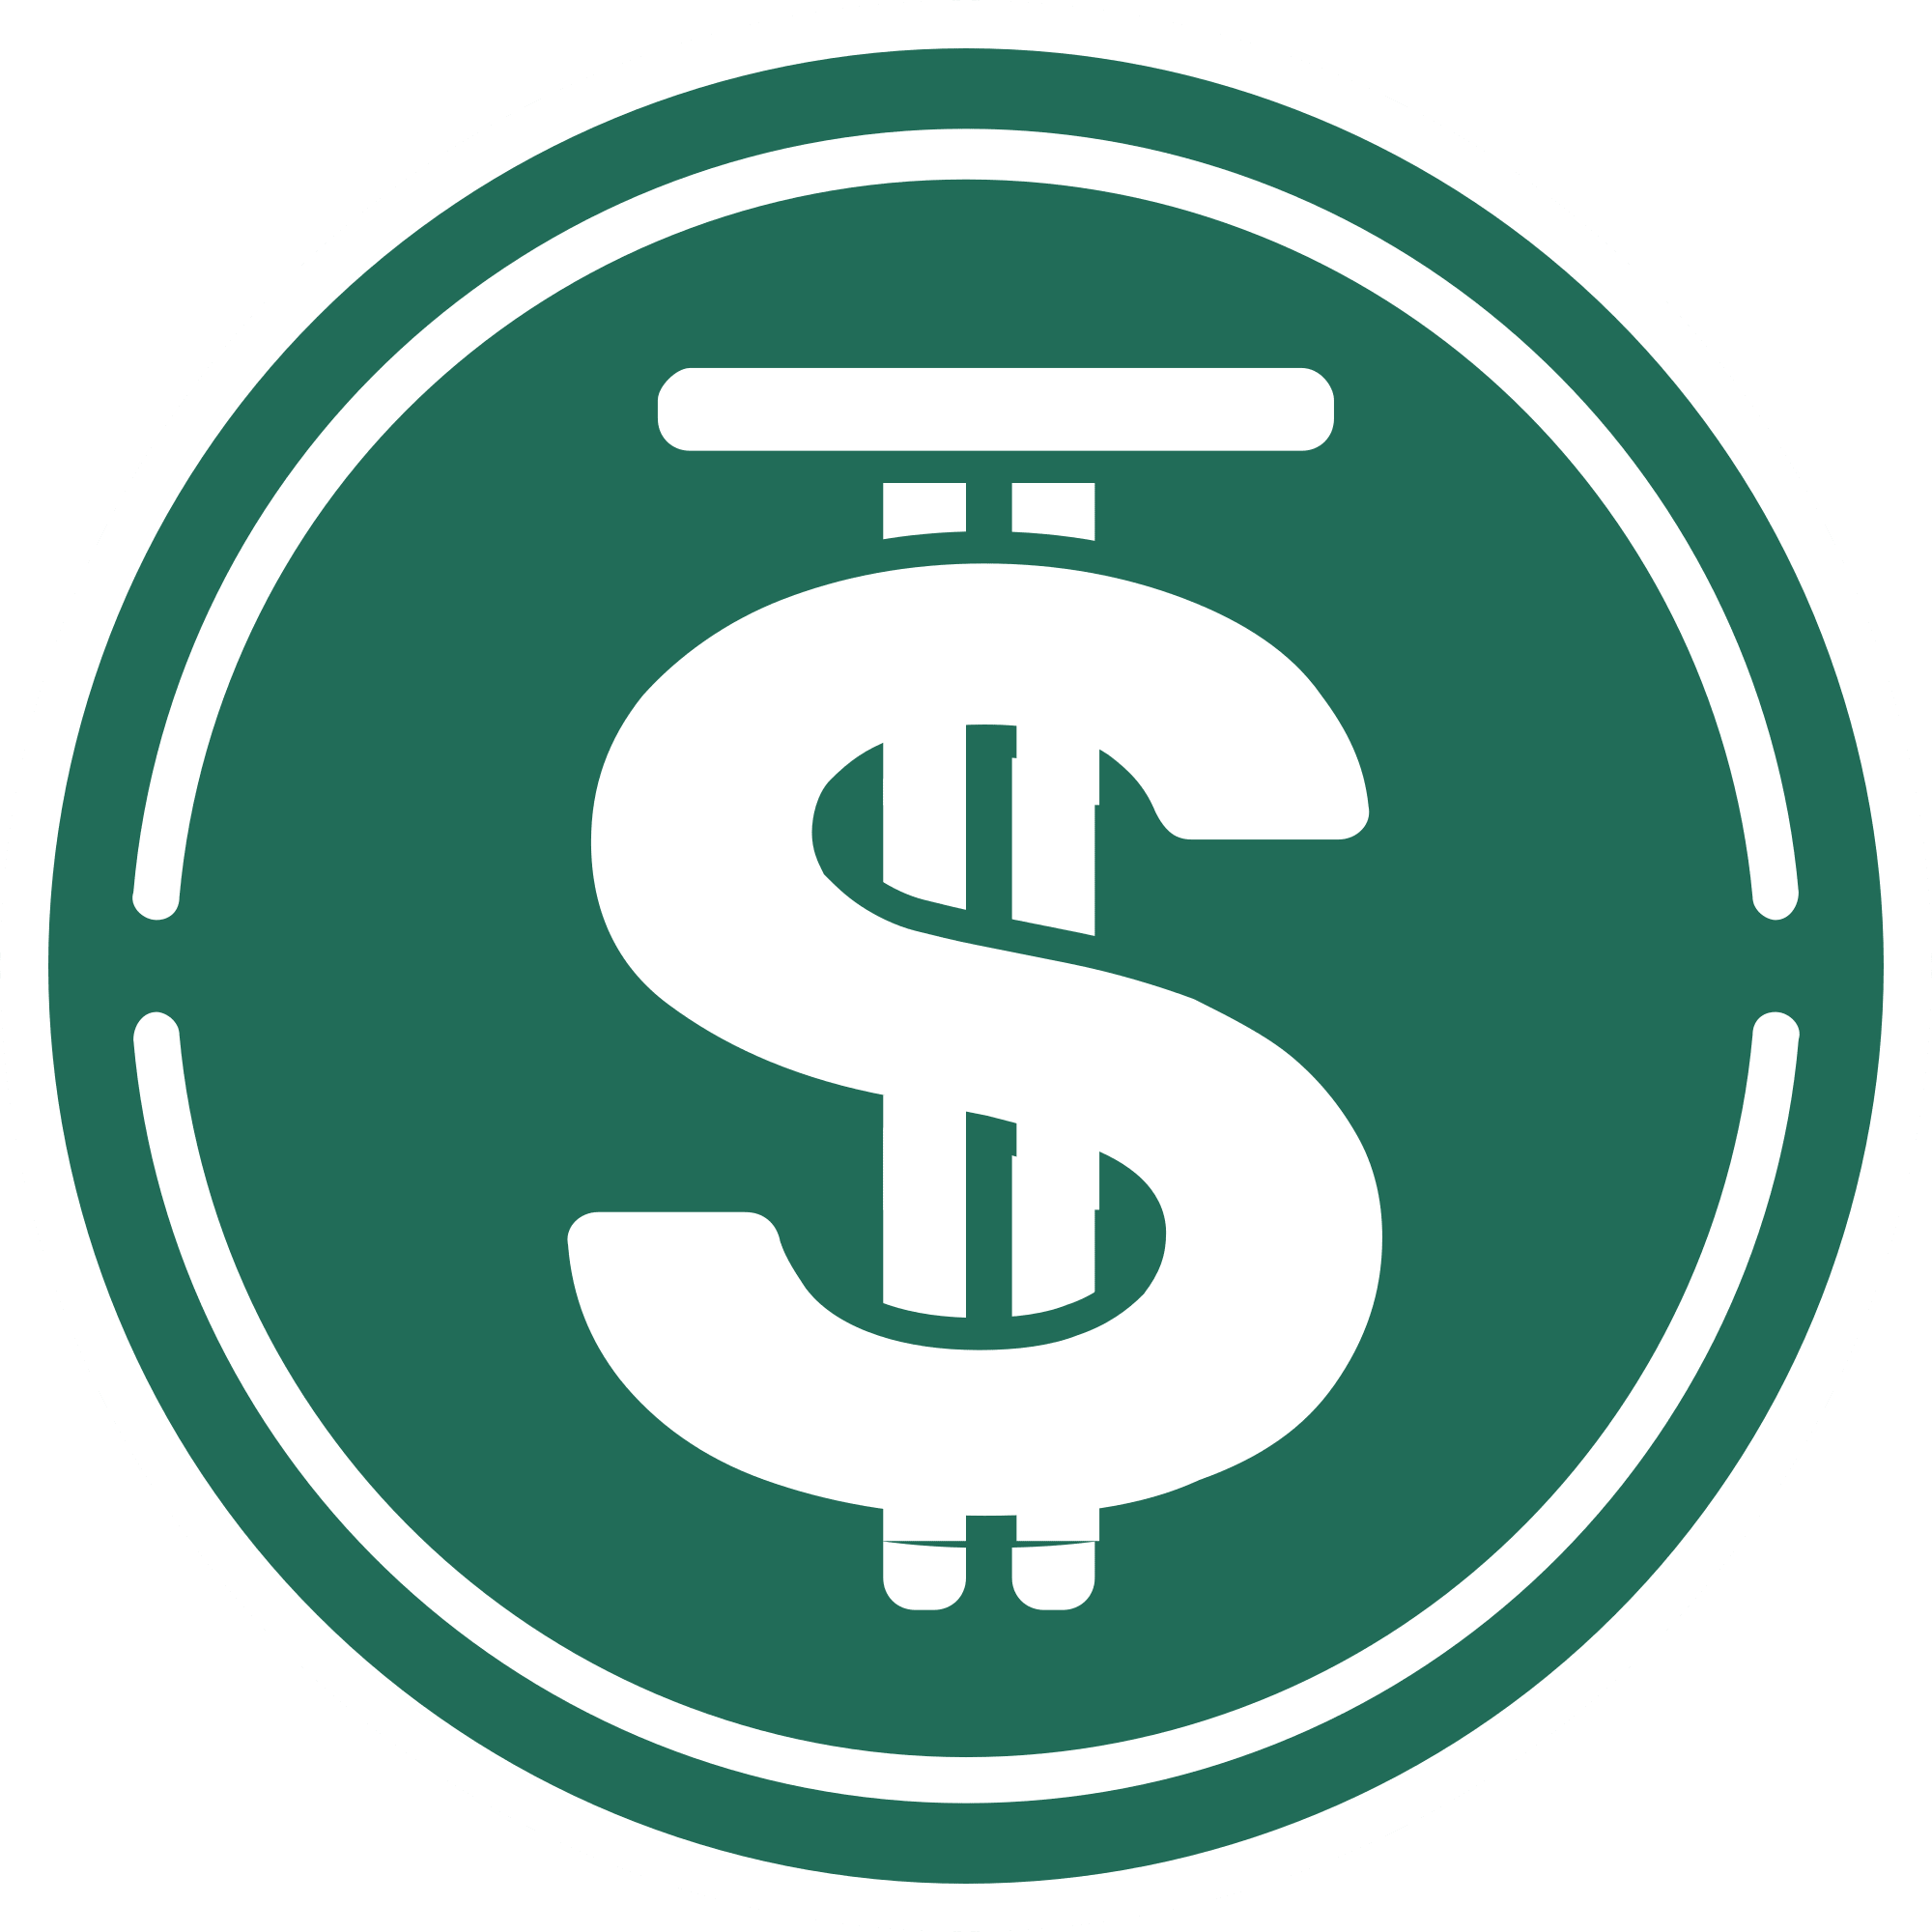 USDD logo in png format